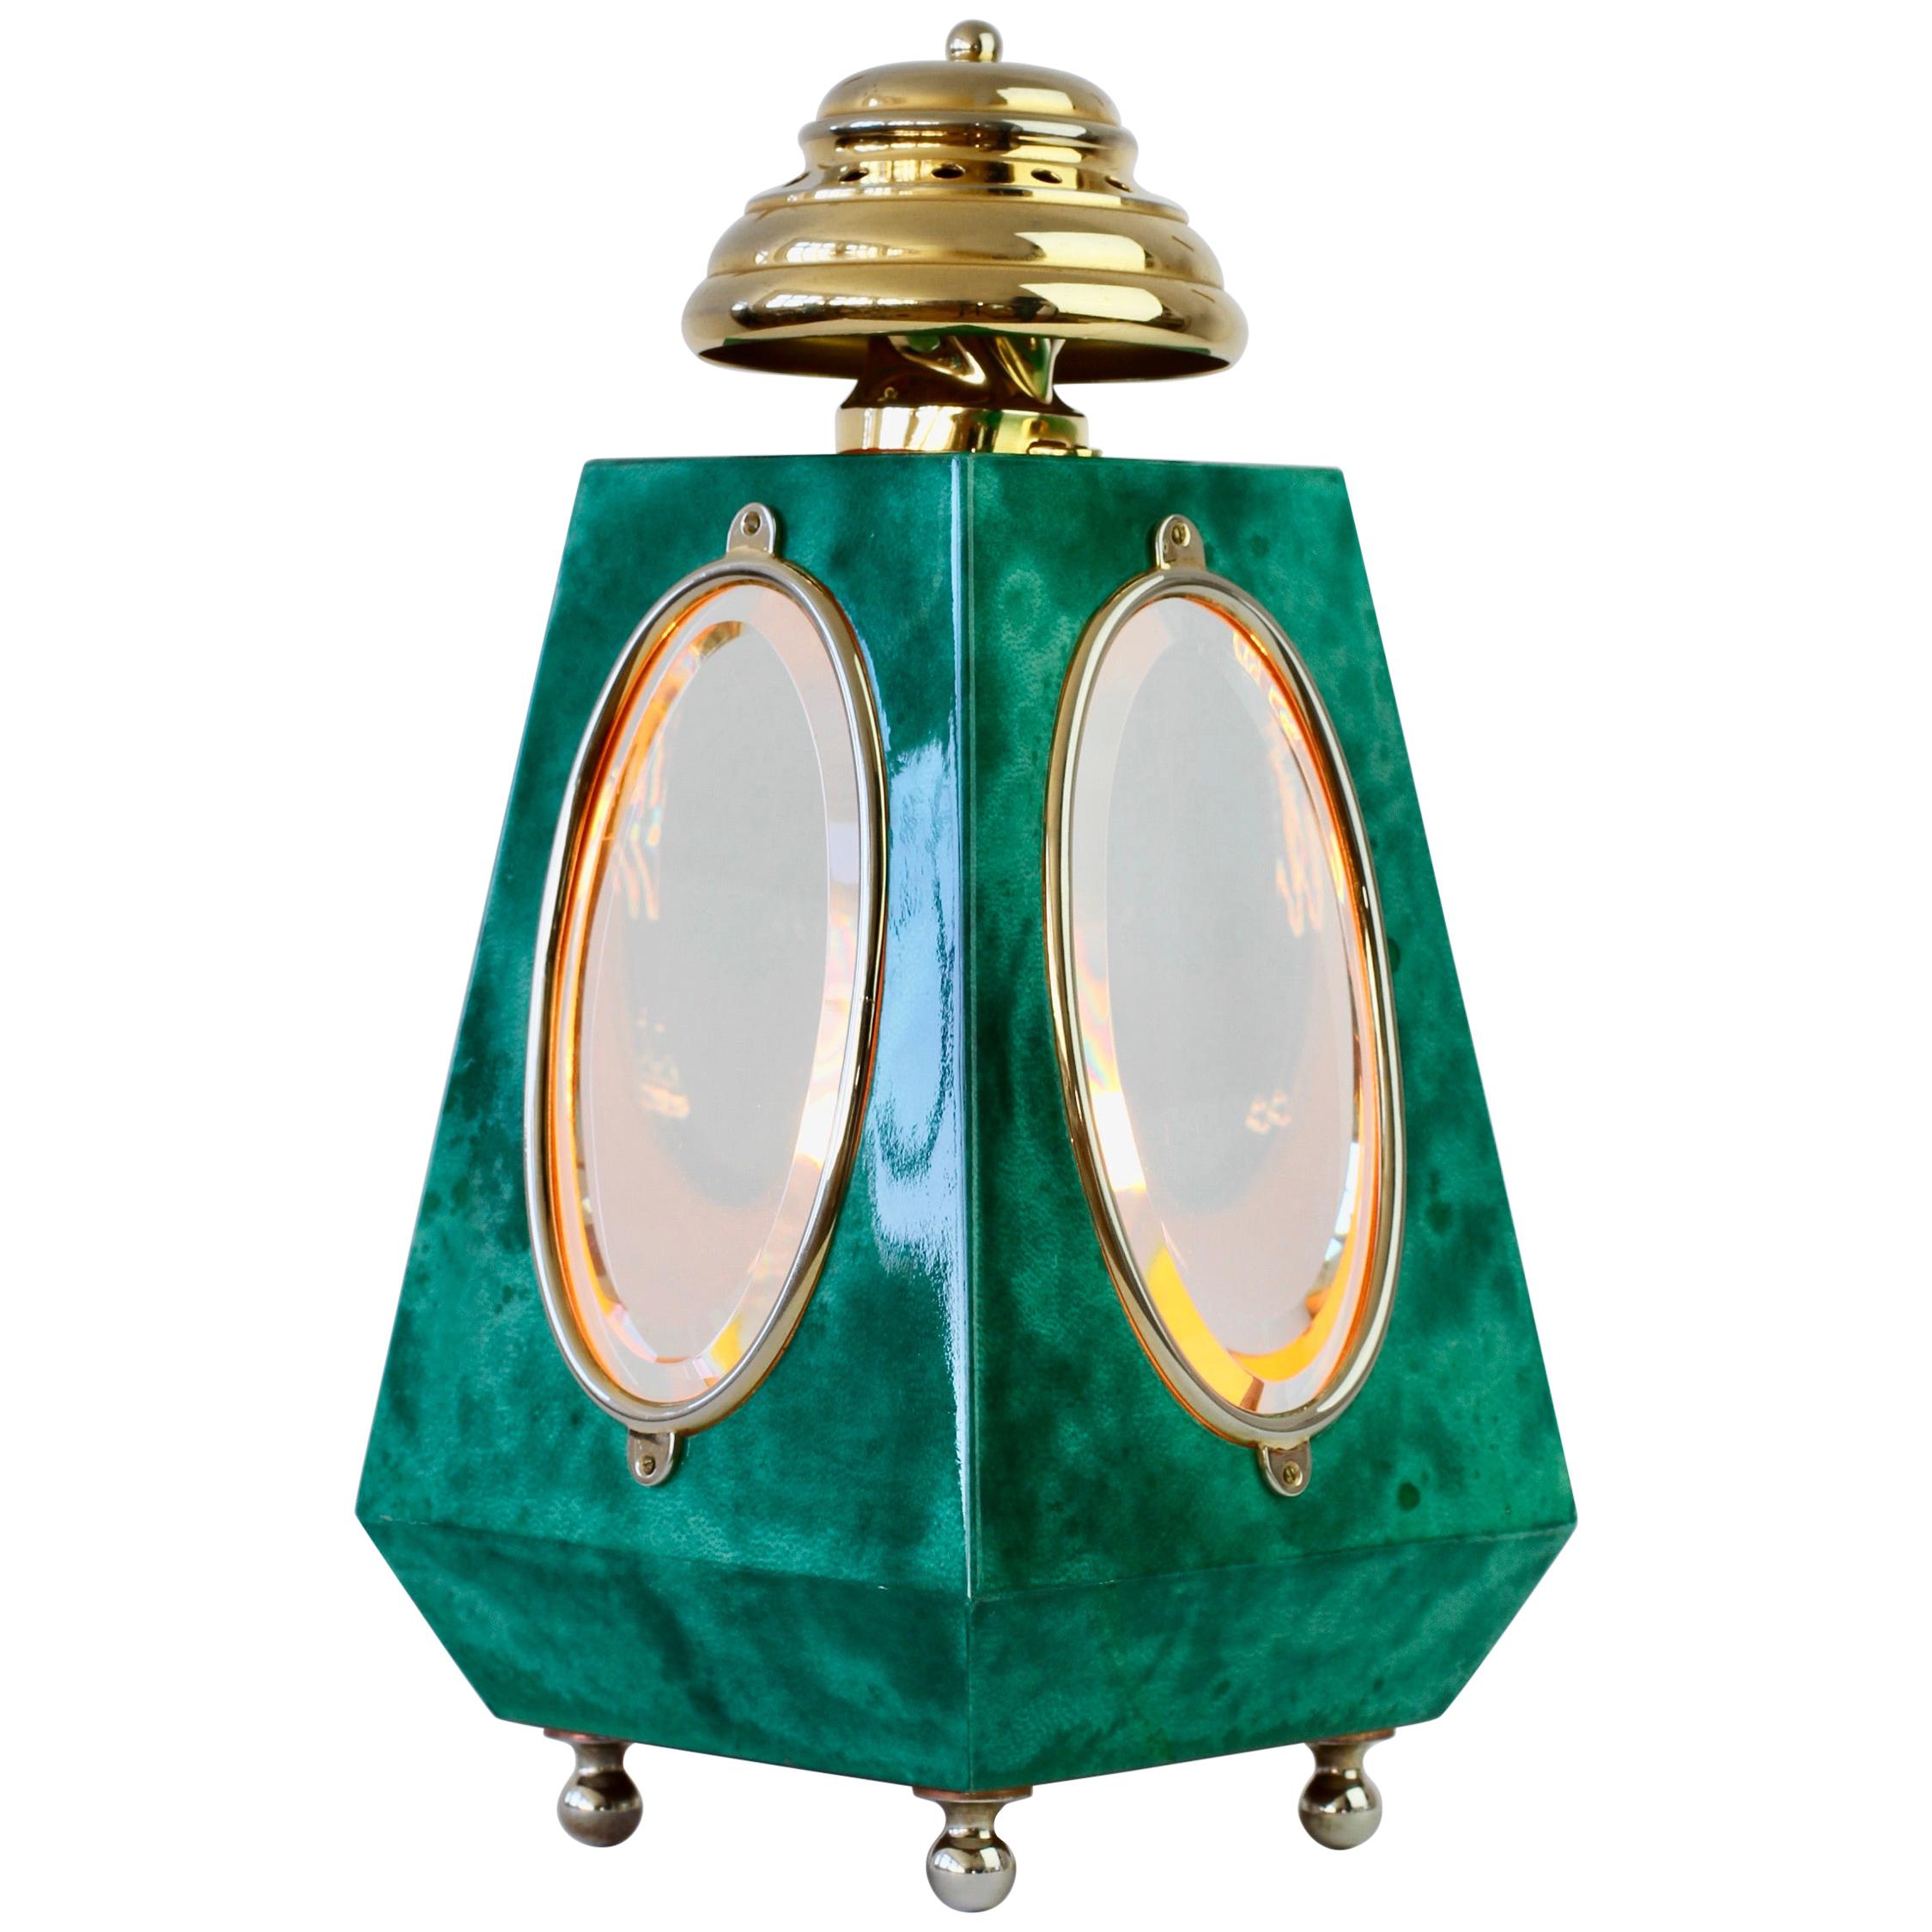 Aldo Tura 1960s Midcentury Table Lamp / Lantern in Green Italian Goatskin